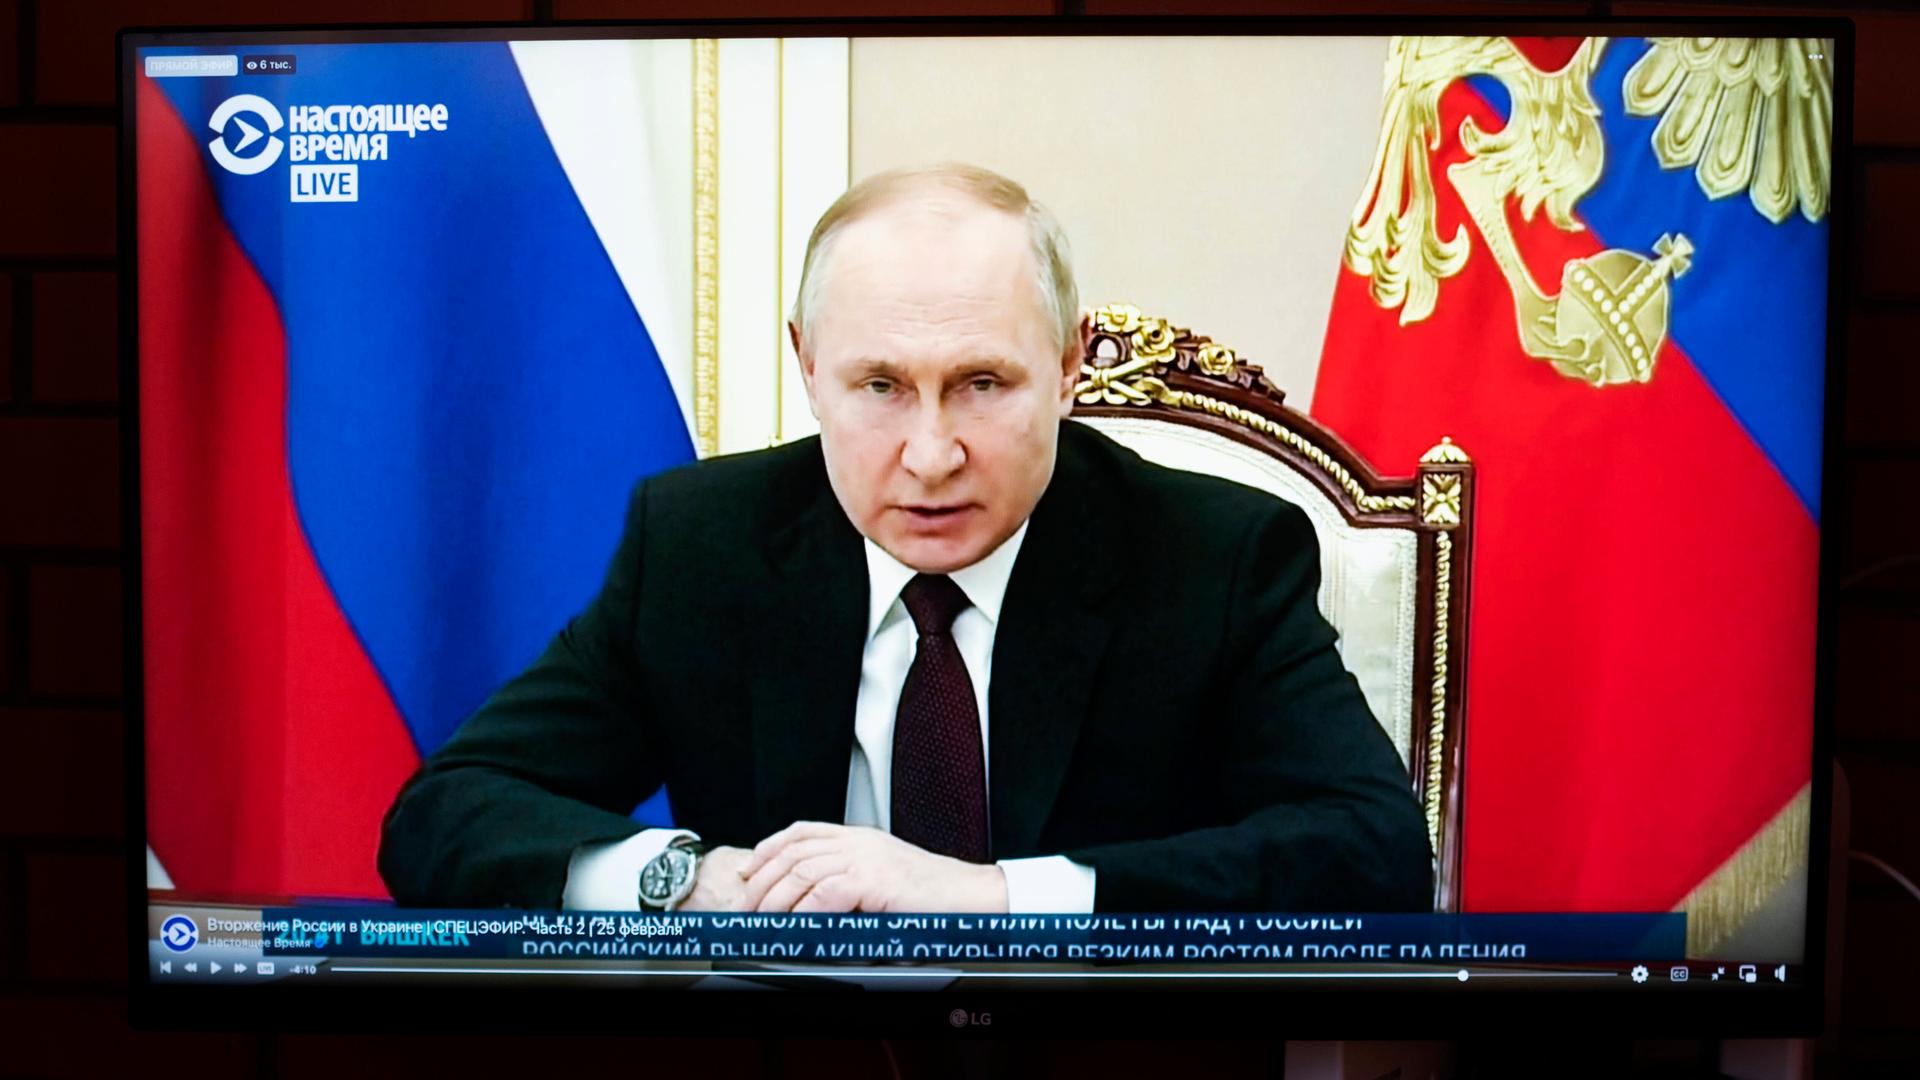 February 25, 2022, Kiev, Ukraine: President Vladimir Putin issued an urgent appeal to the servicemen of the Ukrainian Ar